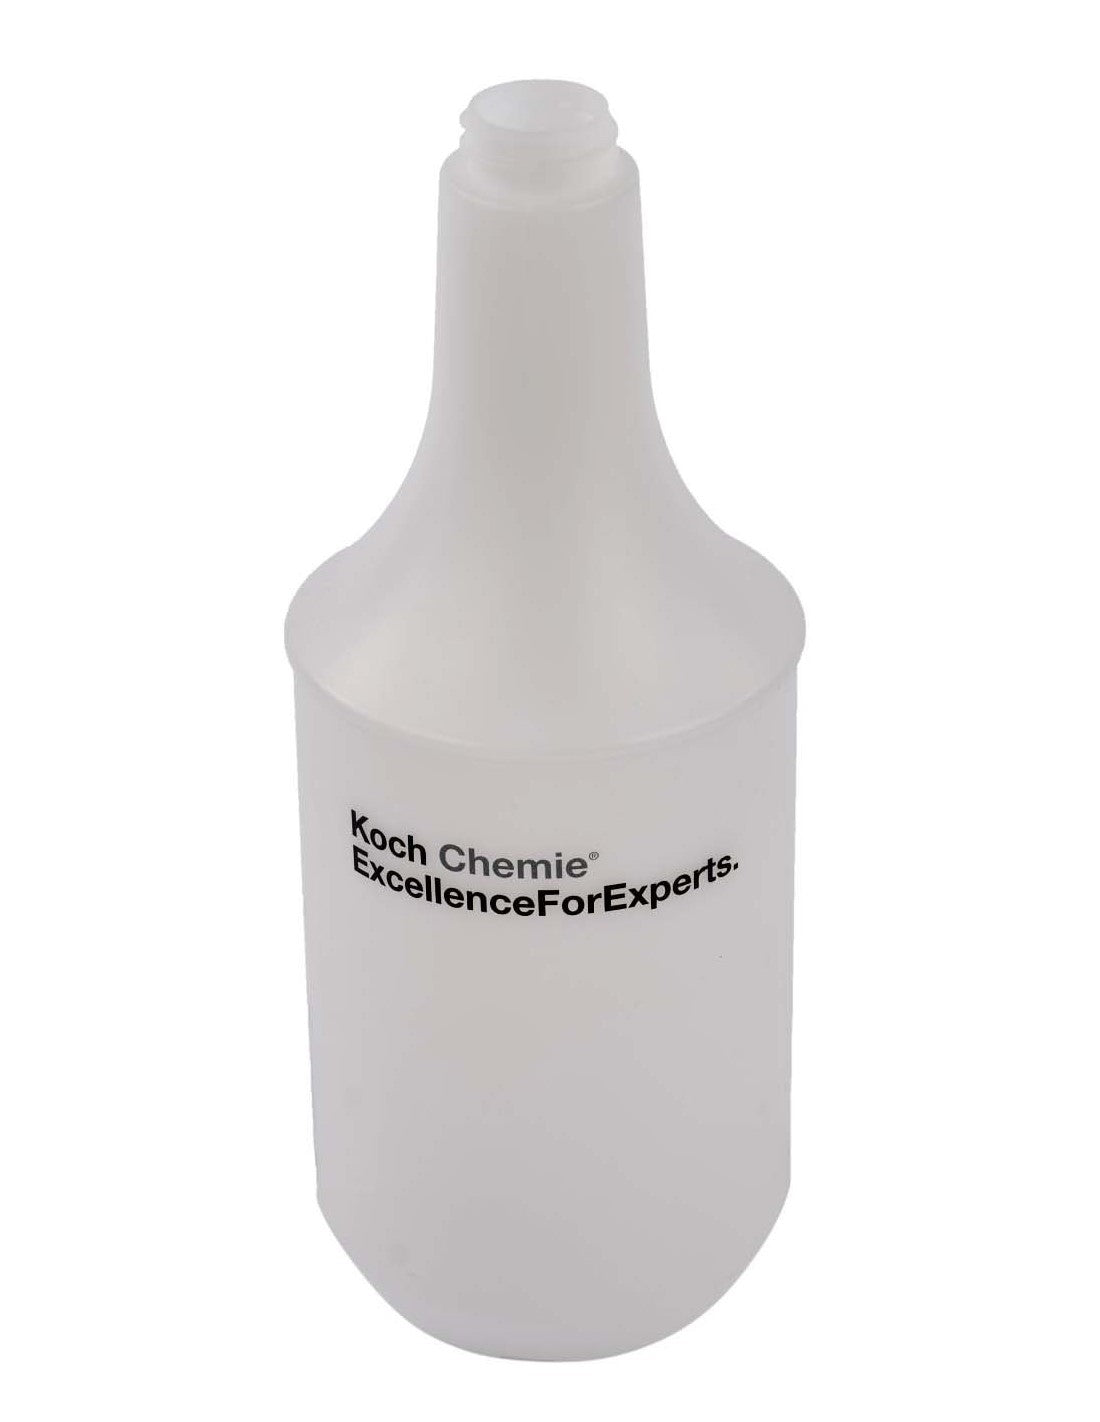 Spray Bottle - Koch Chemie